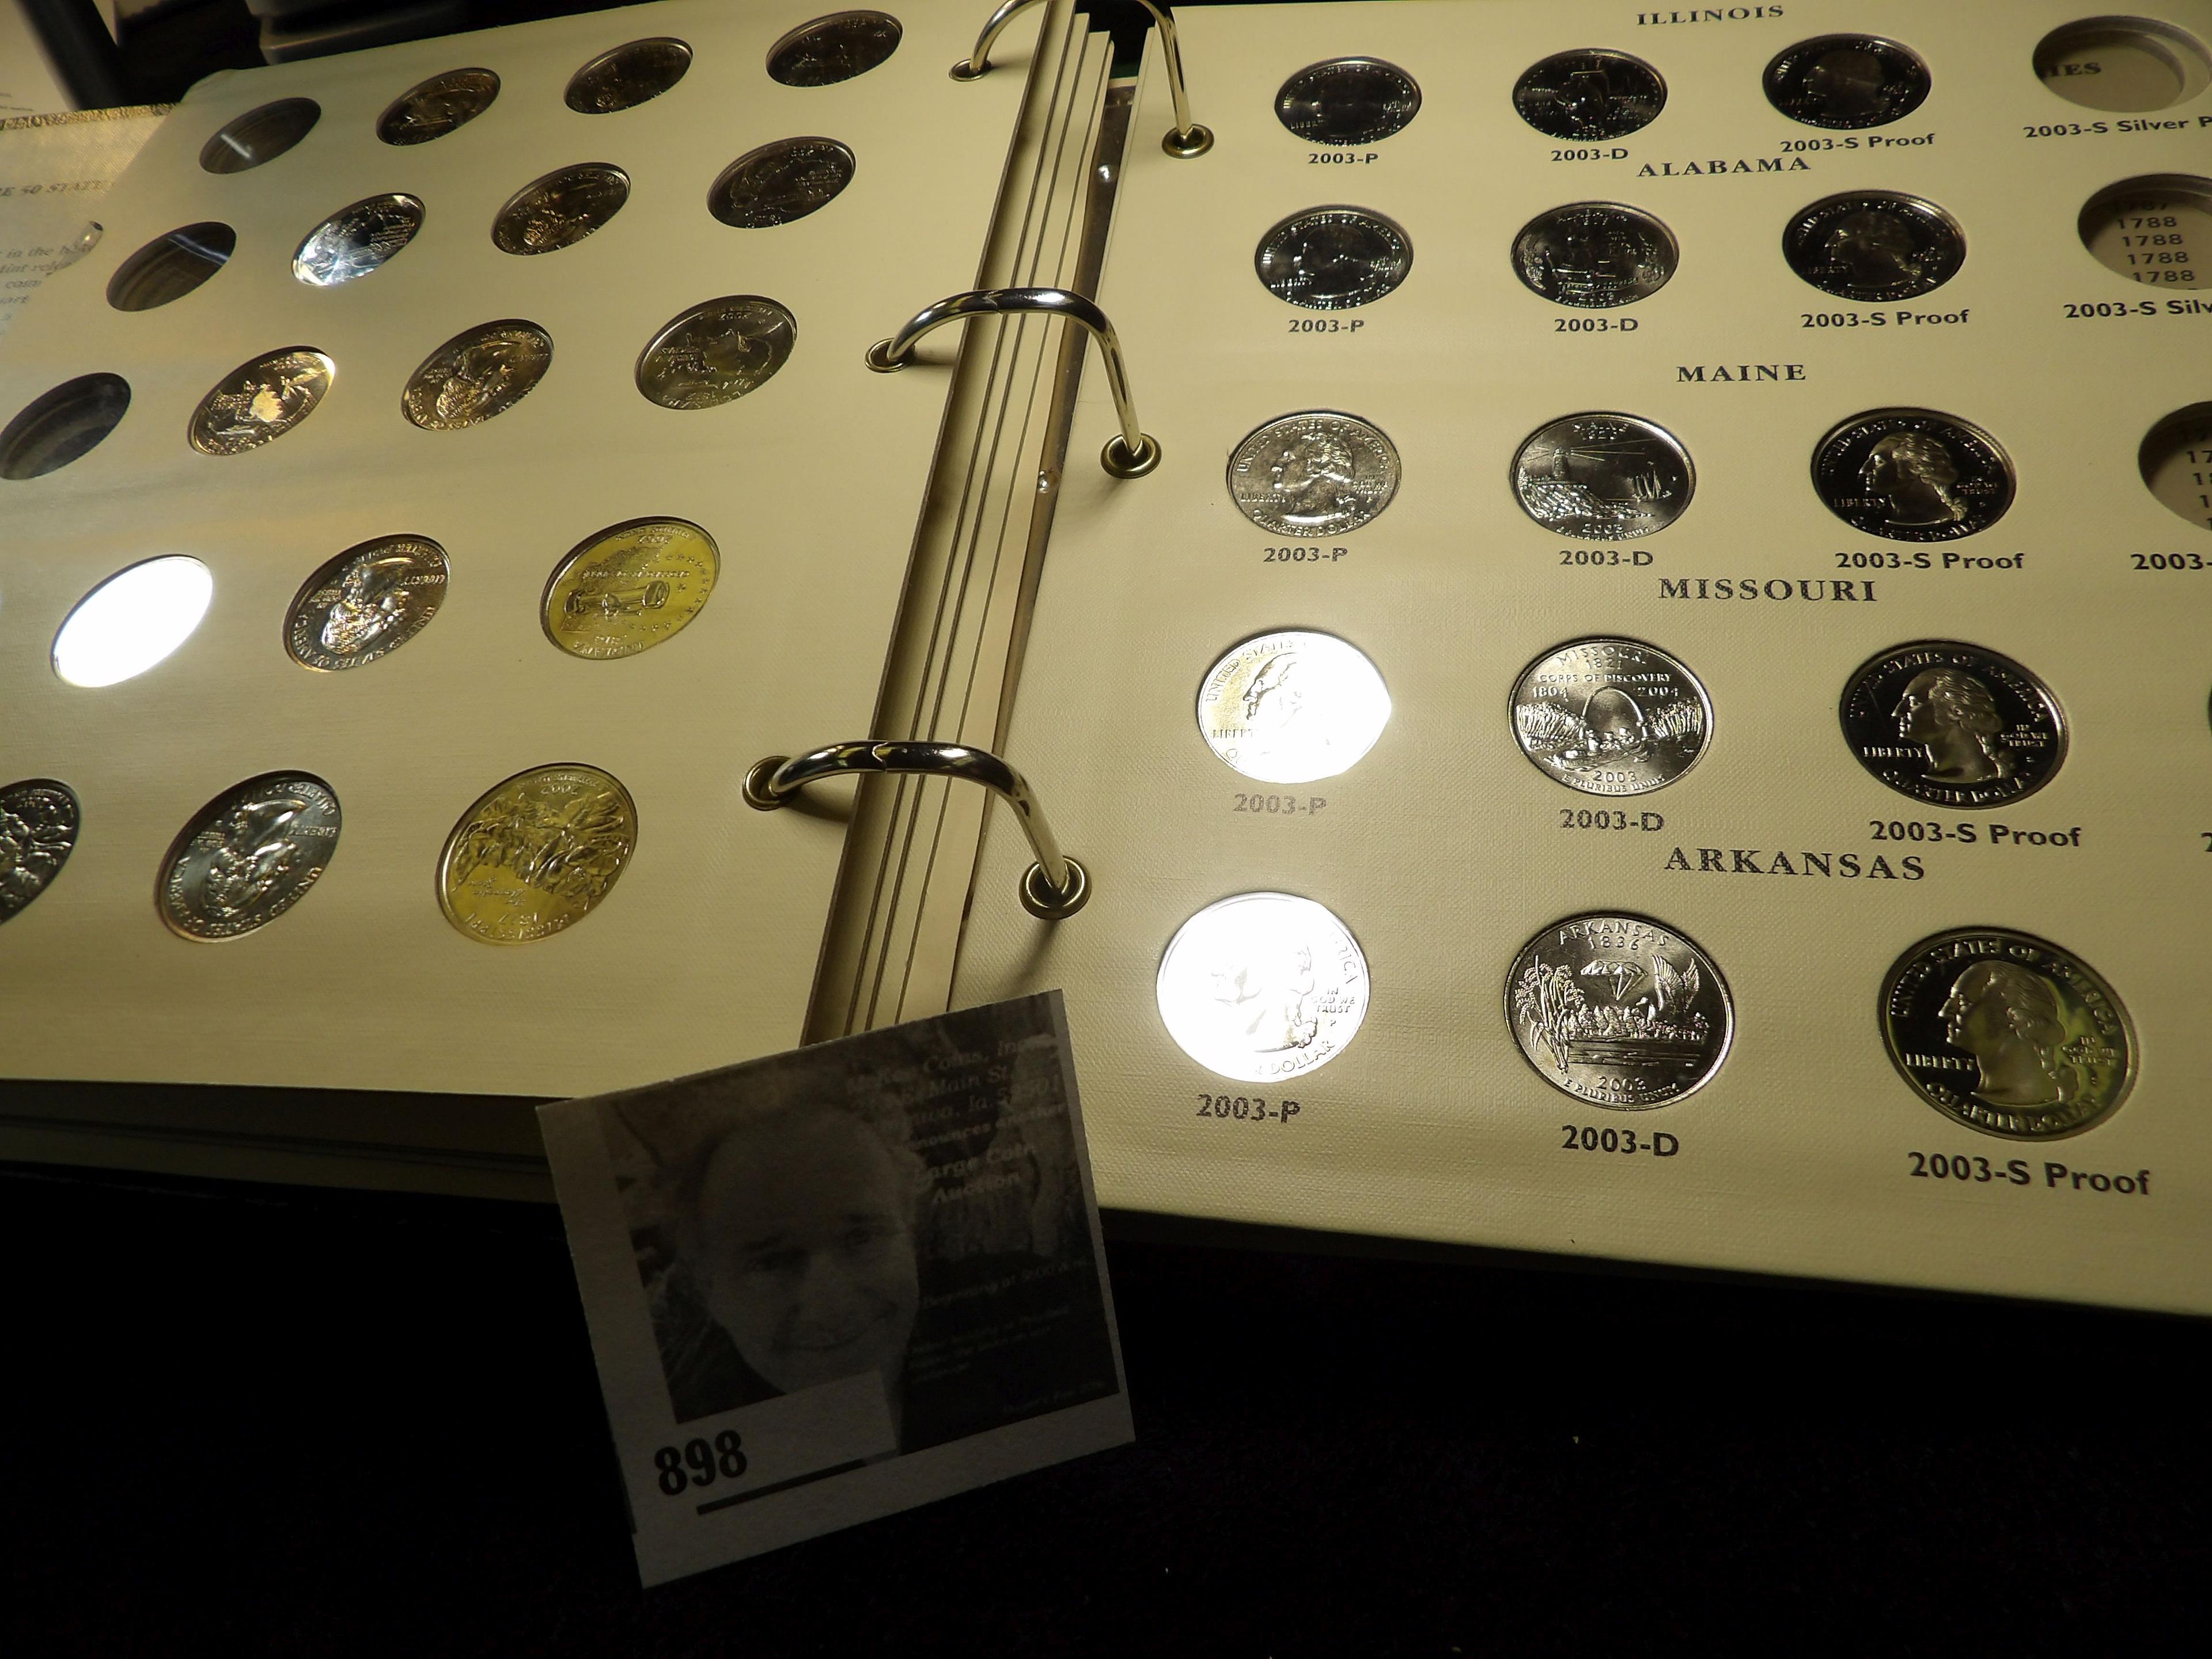 Incomplete Littleton Custom Coin Album with 1999 P, D, & S Delaware, Pennsylvania, New Jersey, Georg